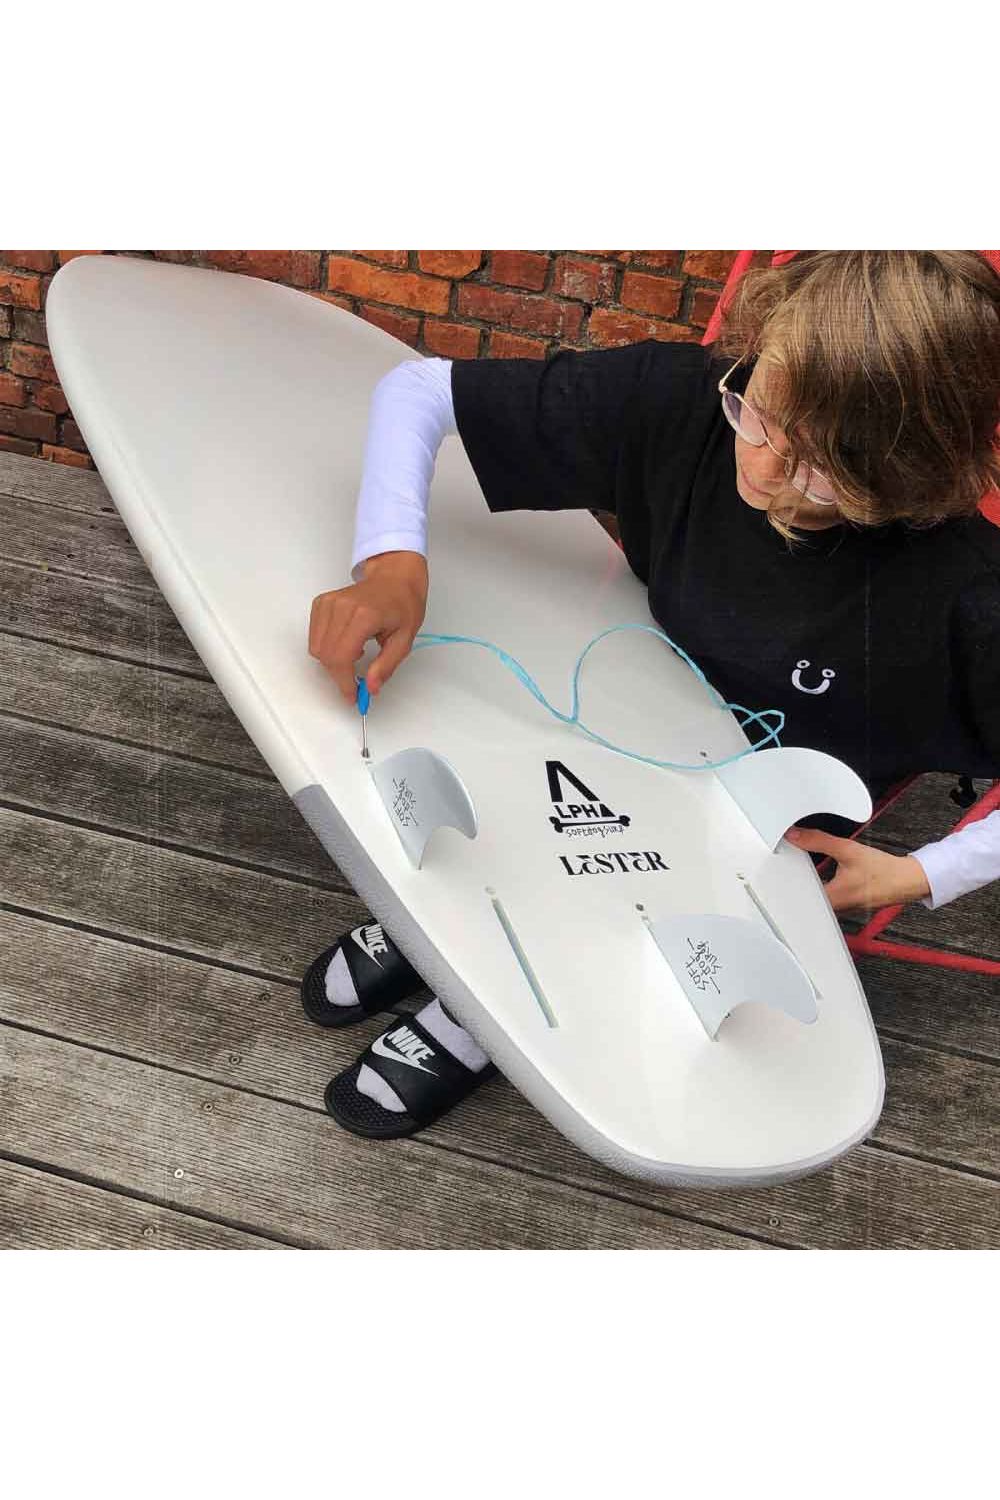 Soft Dog Alpha Dog 5'6" Surfboard With Futures 5 Fins